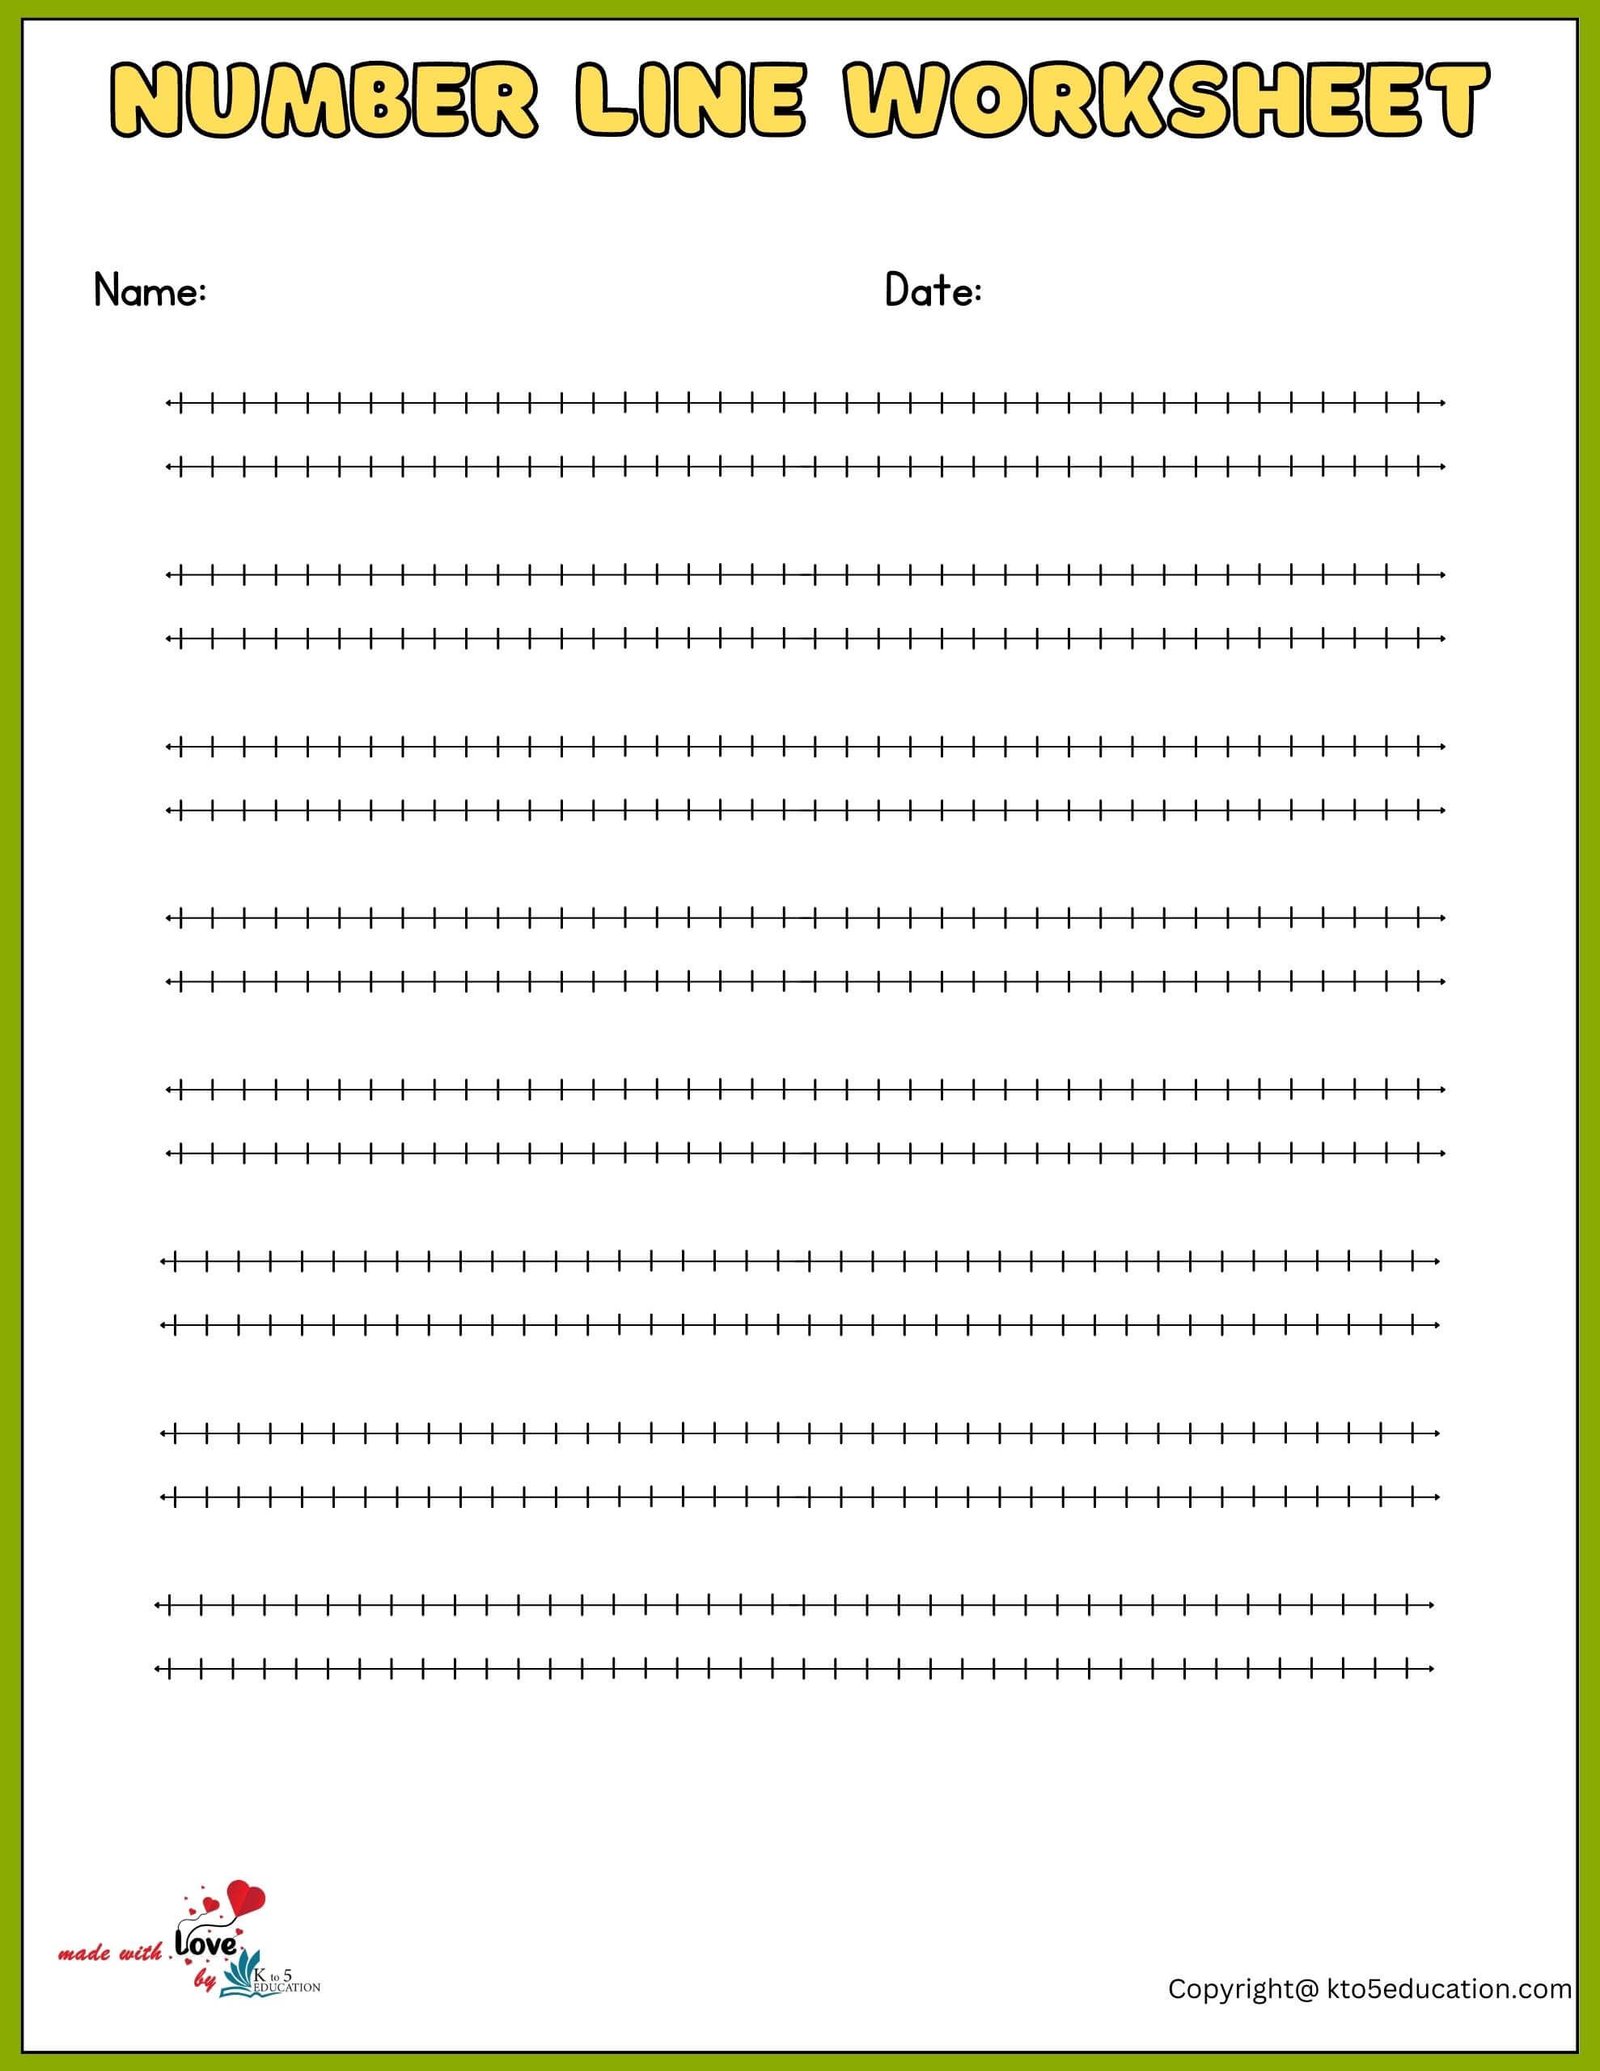 Free Double Number Line Printable Worksheet 1-40